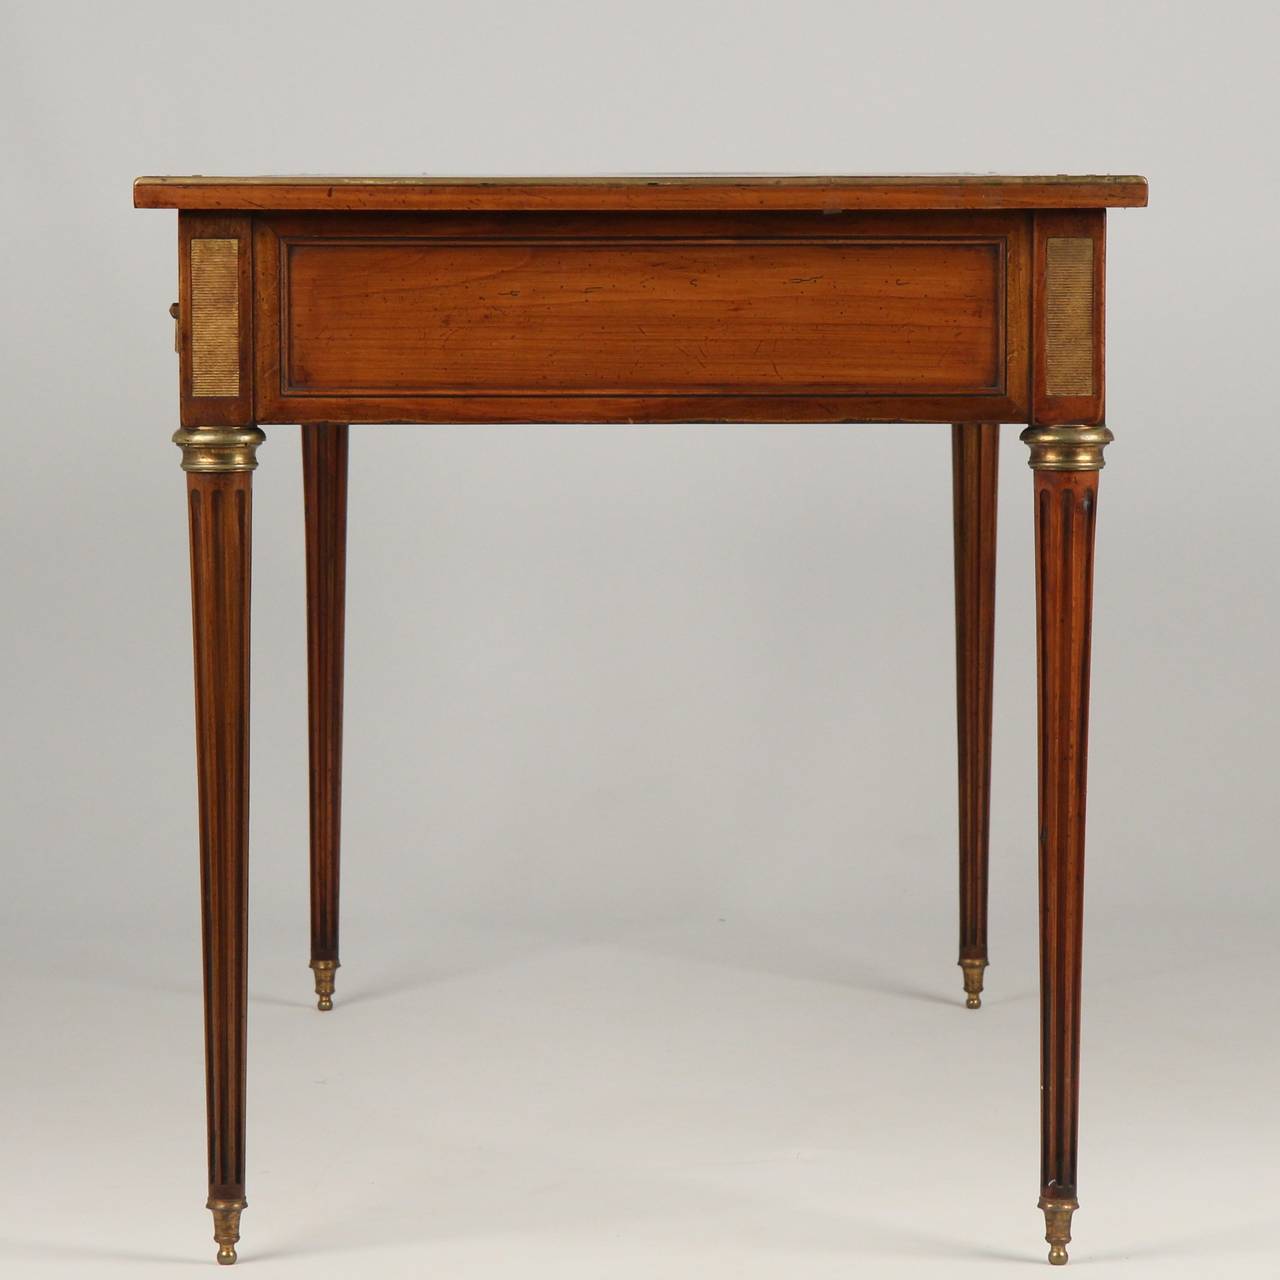 Fruitwood French Louis XVI Style Antique Bureau Plat Writing Desk c. 1920-40